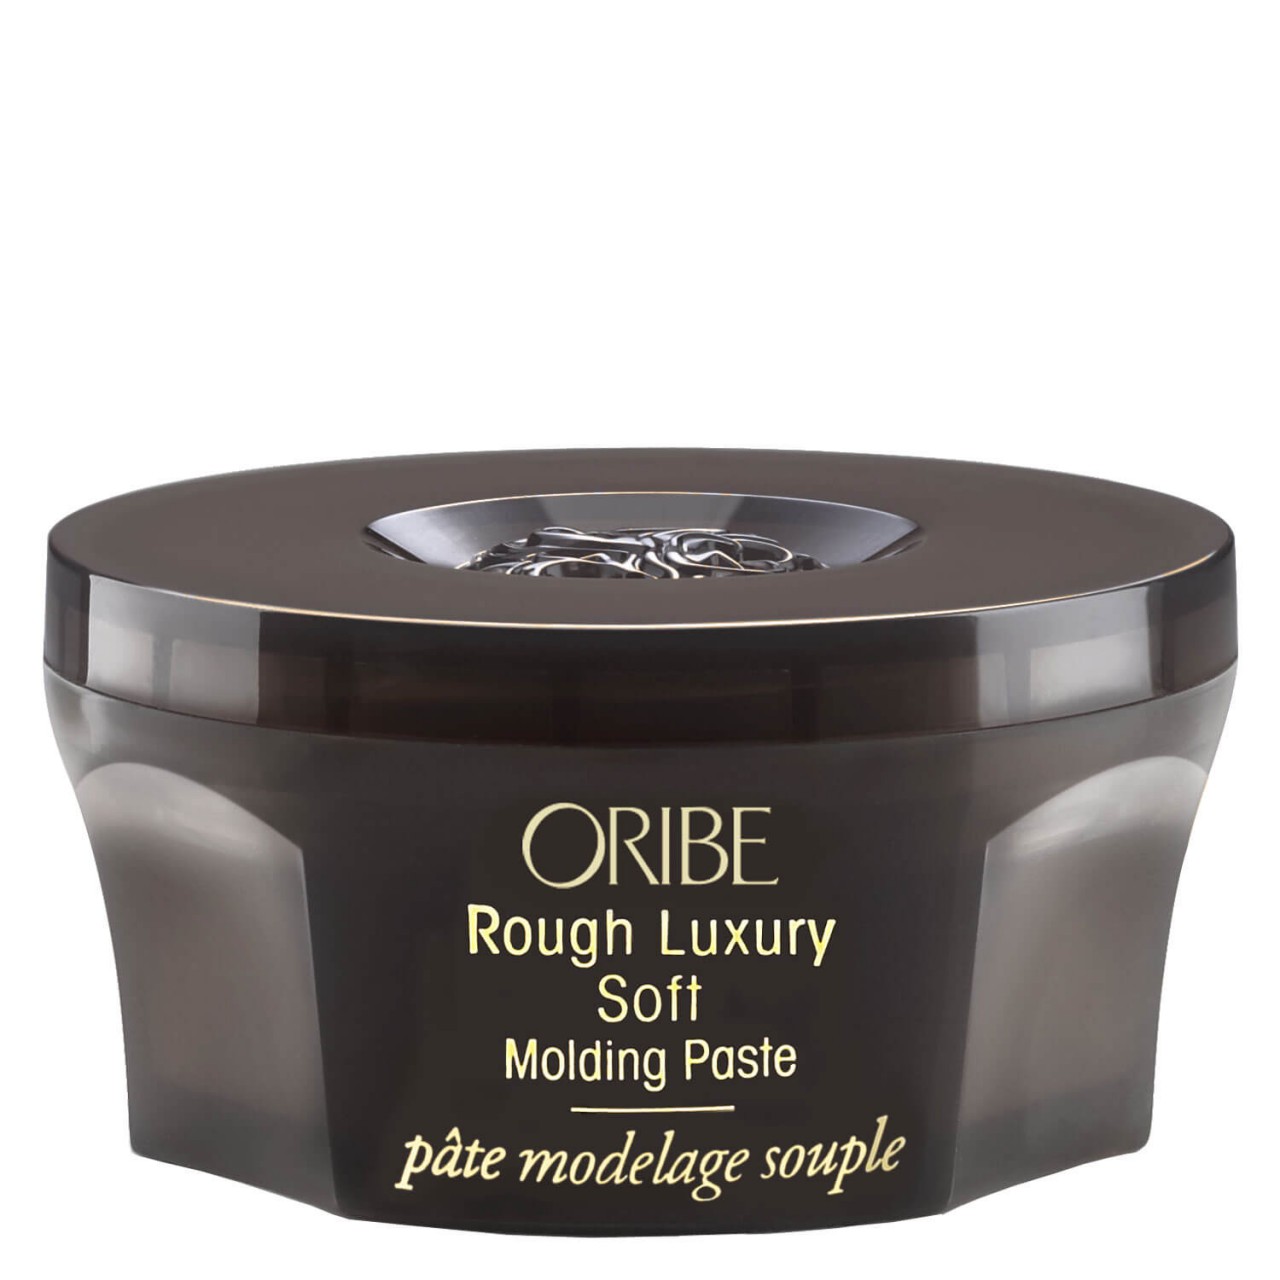 Oribe Style - Rough Luxury Soft Molding Paste von Oribe